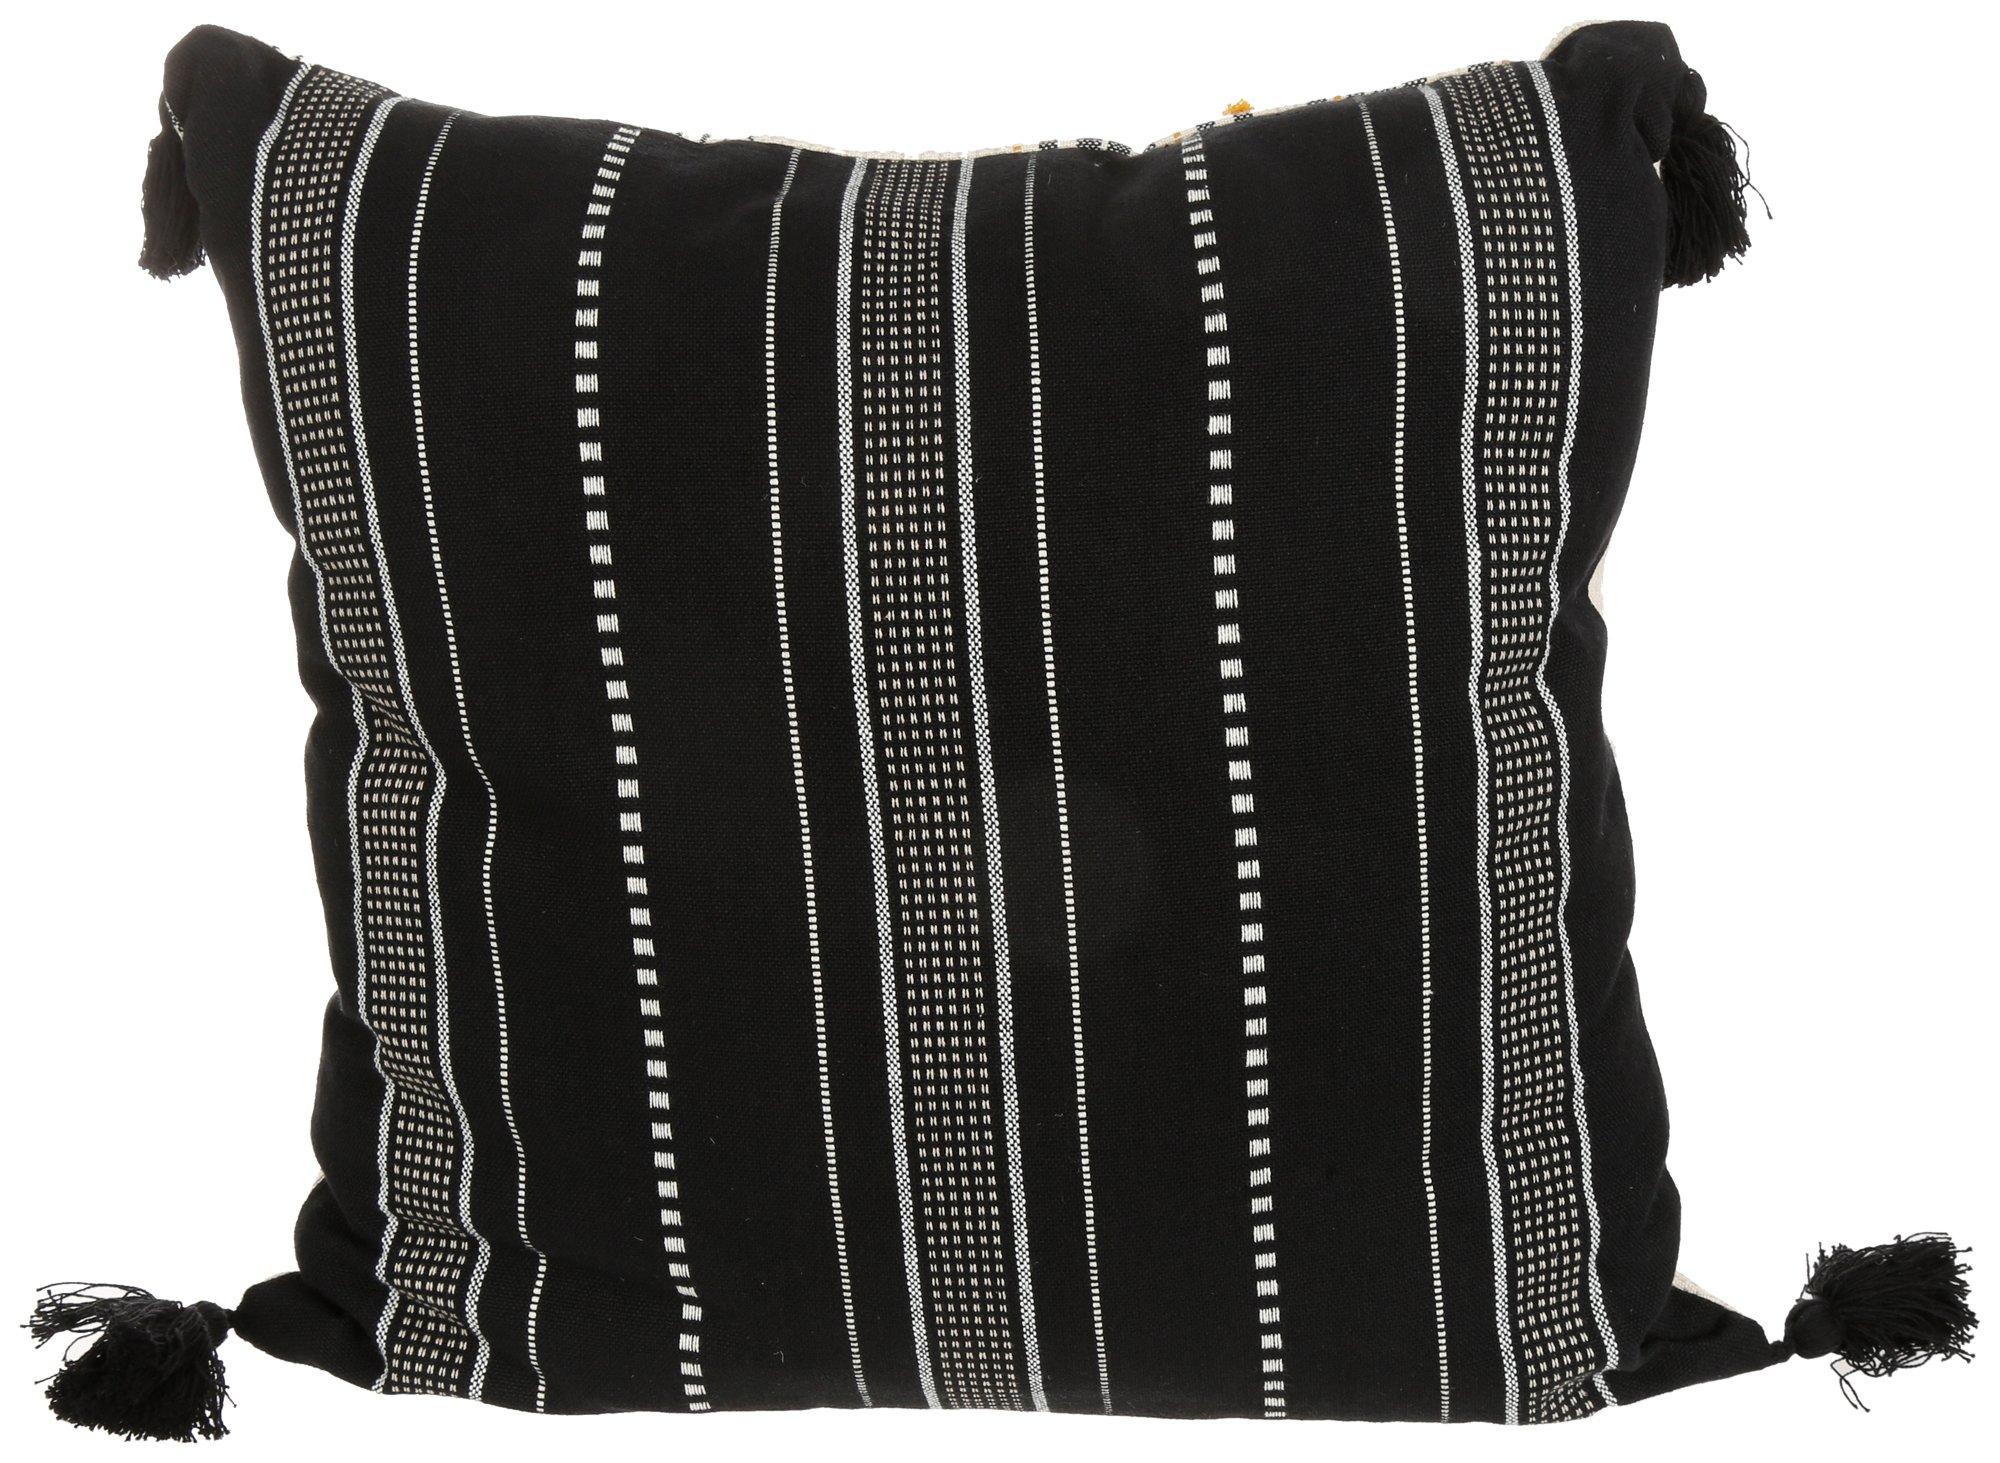 20in Stripe Tassel Decorative Throw Pillow